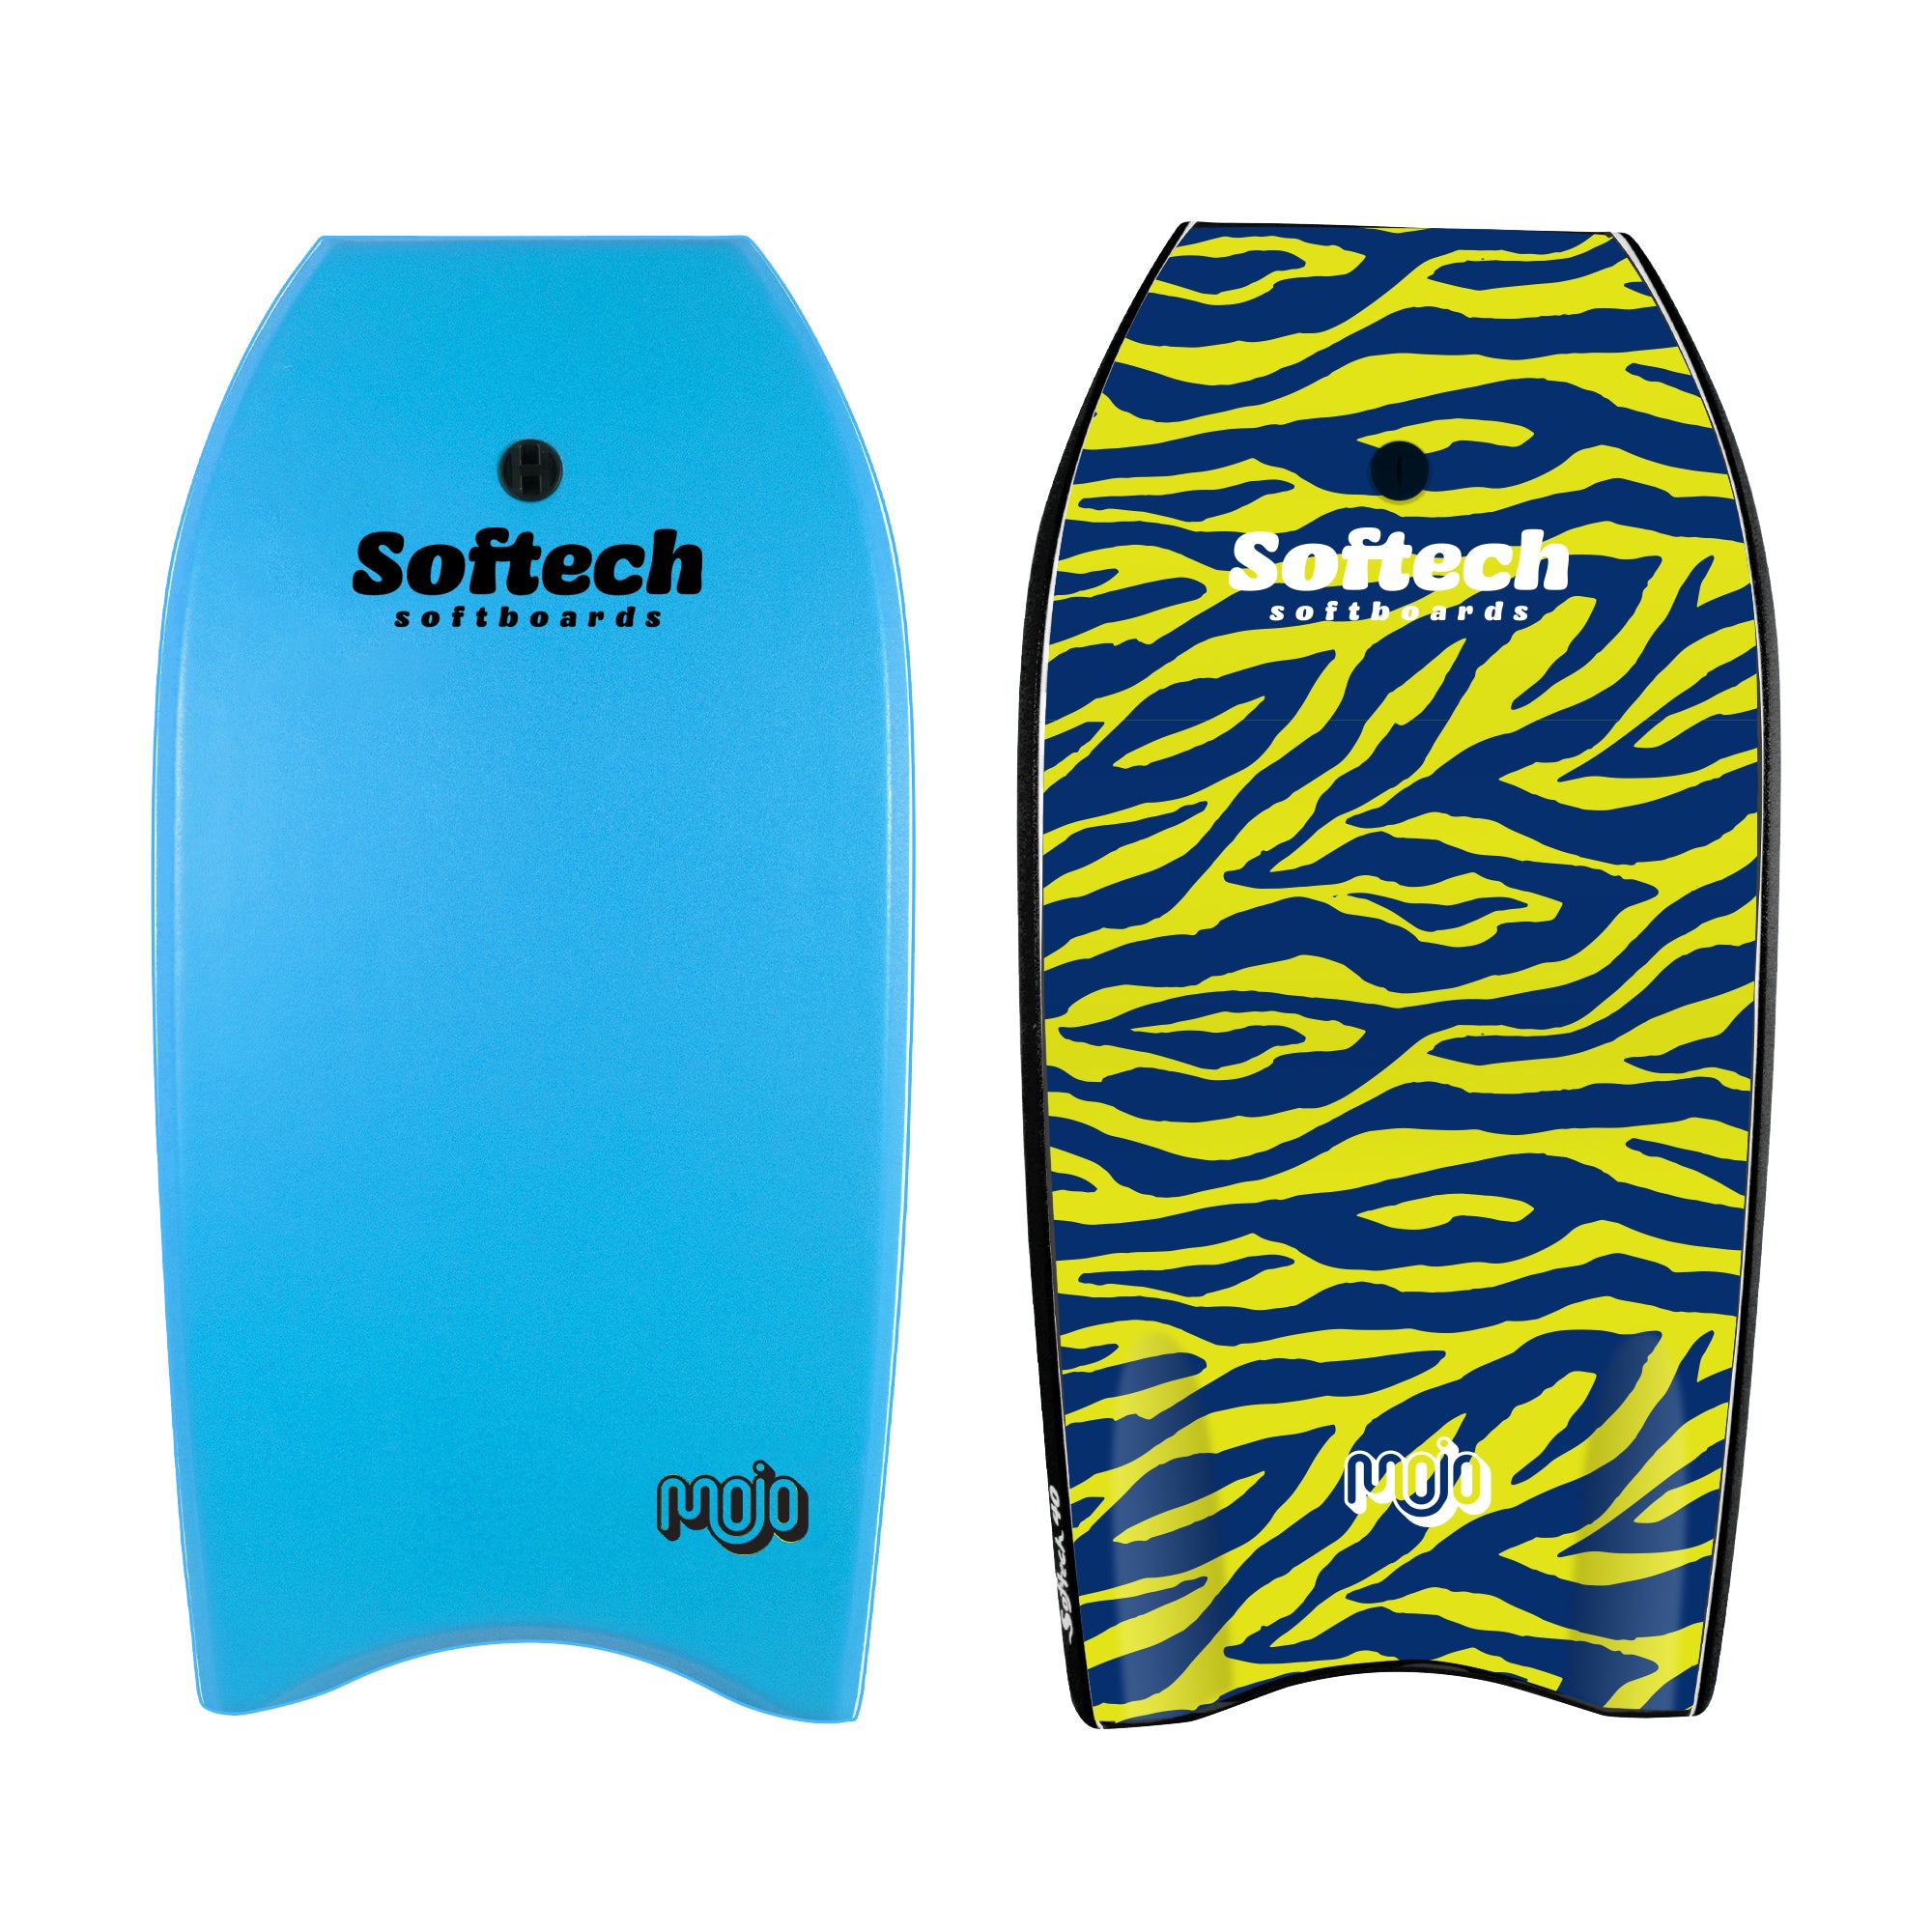 Softech Mojo Bodyboard Sky Blue Zebra - Junglesurf Store -Bali - Indonesia 